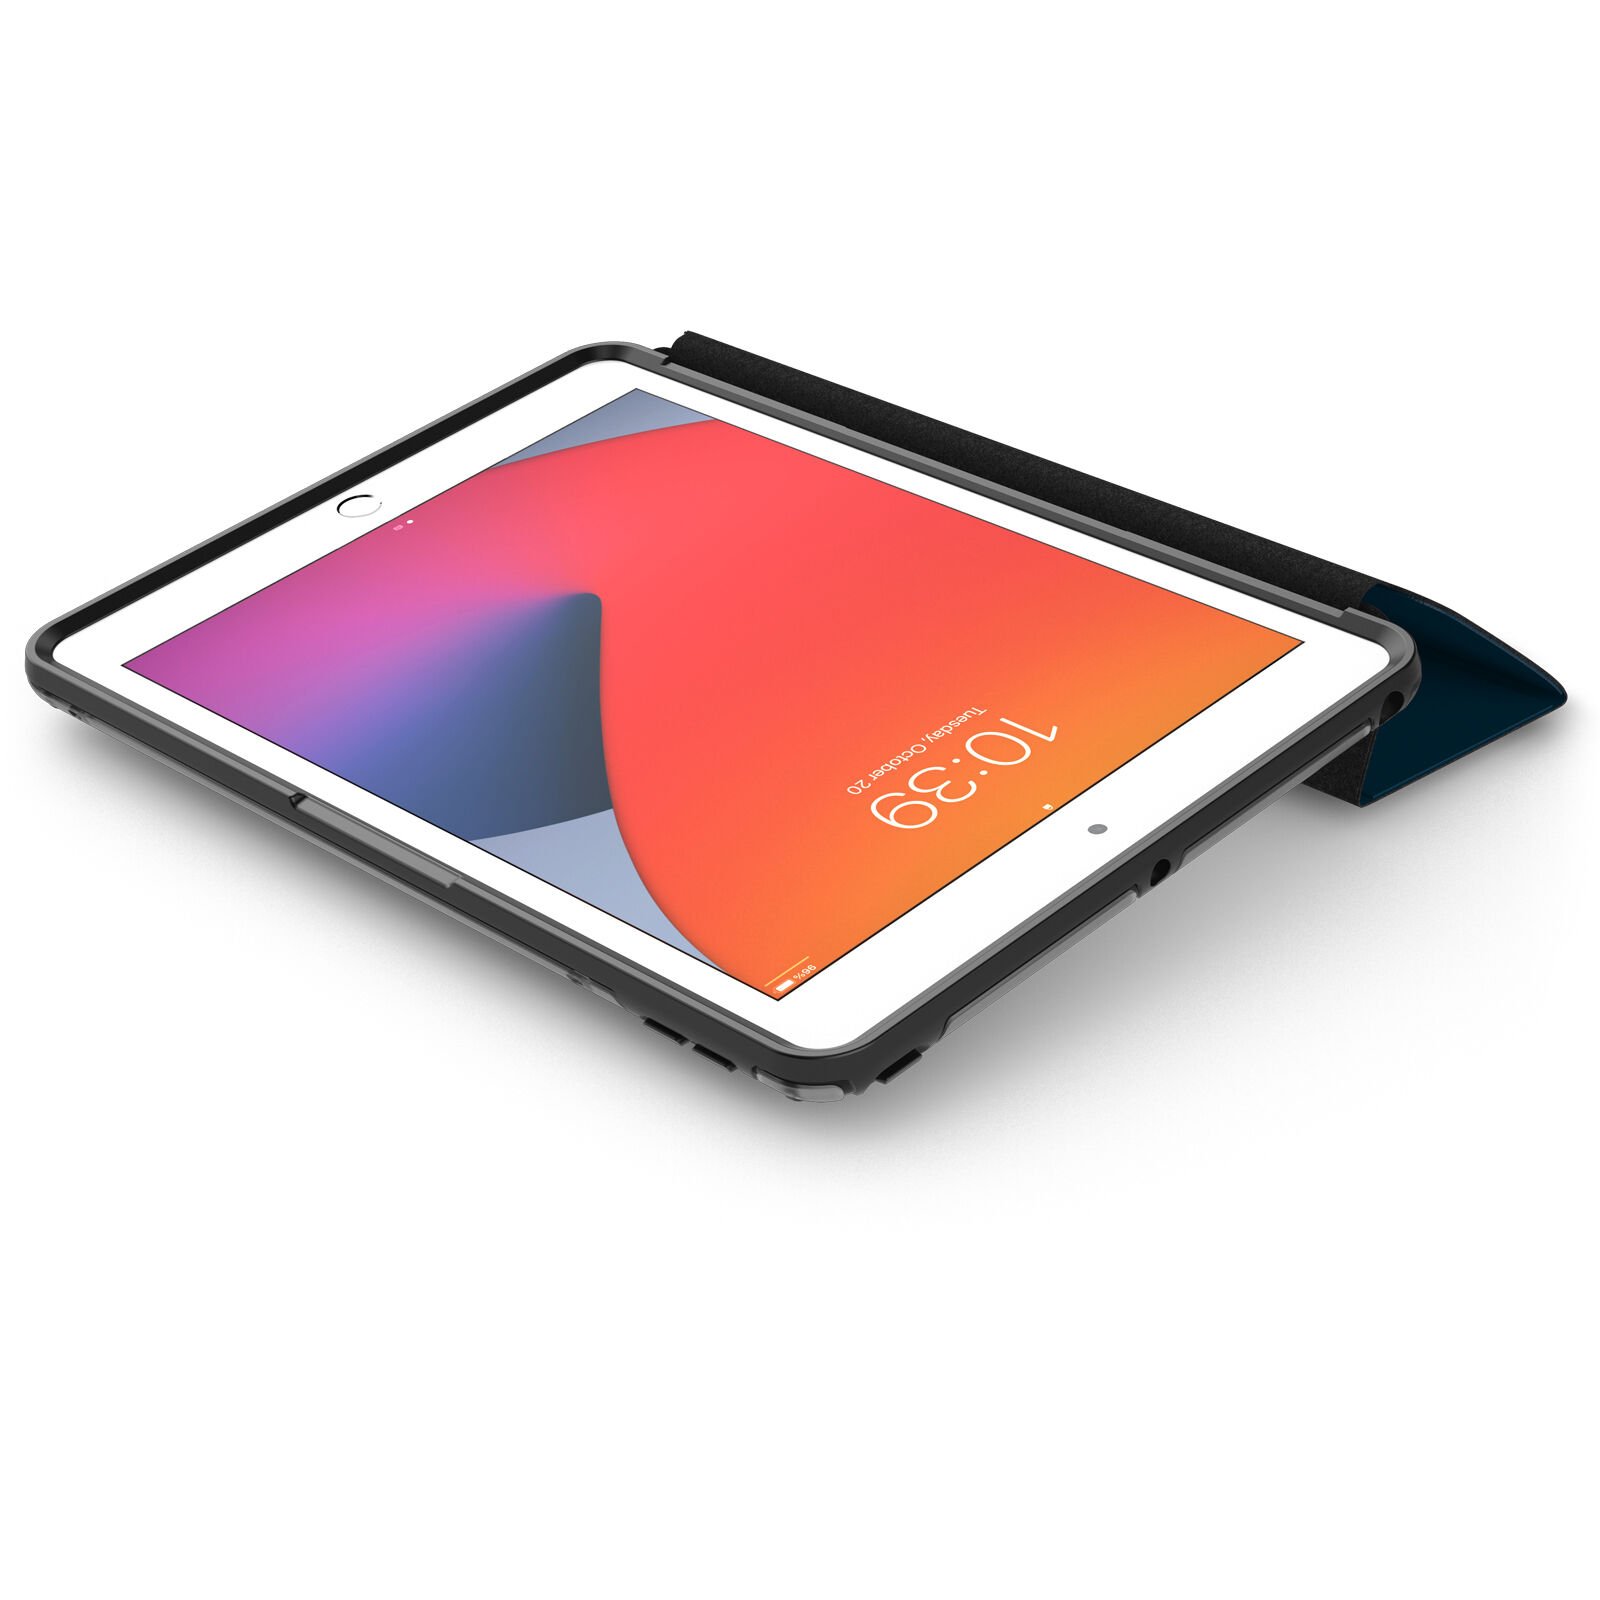 Symmetry Folio Fodral iPad 10.2 9th Gen (2021) blå